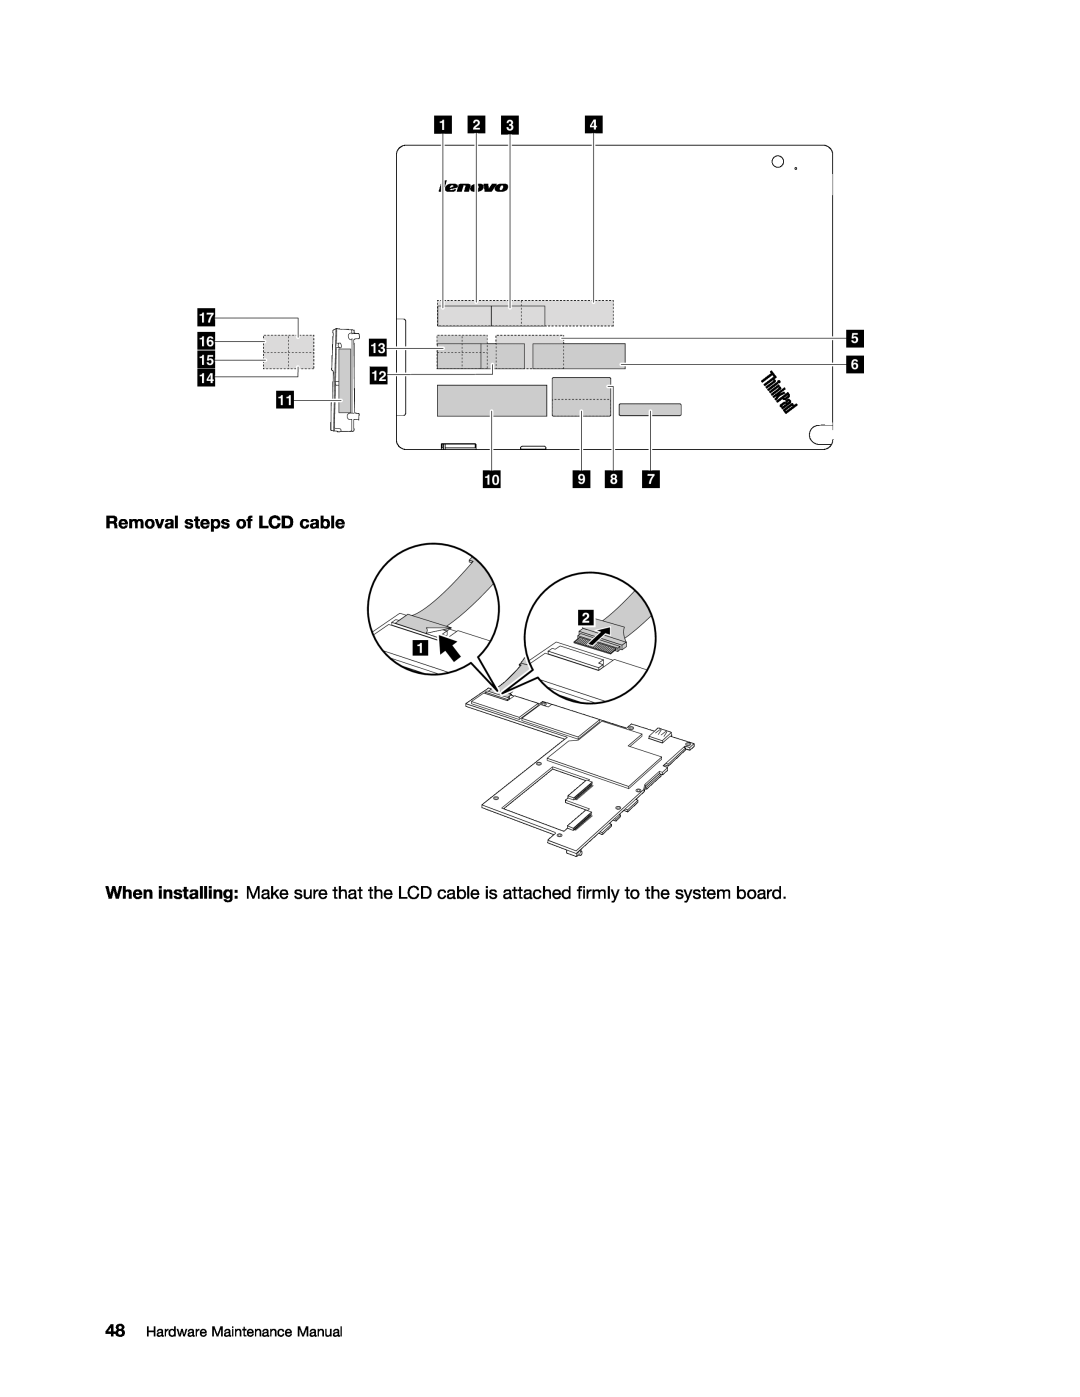 Lenovo 183825U, 183822U manual Removal steps of LCD cable, Hardware Maintenance Manual 